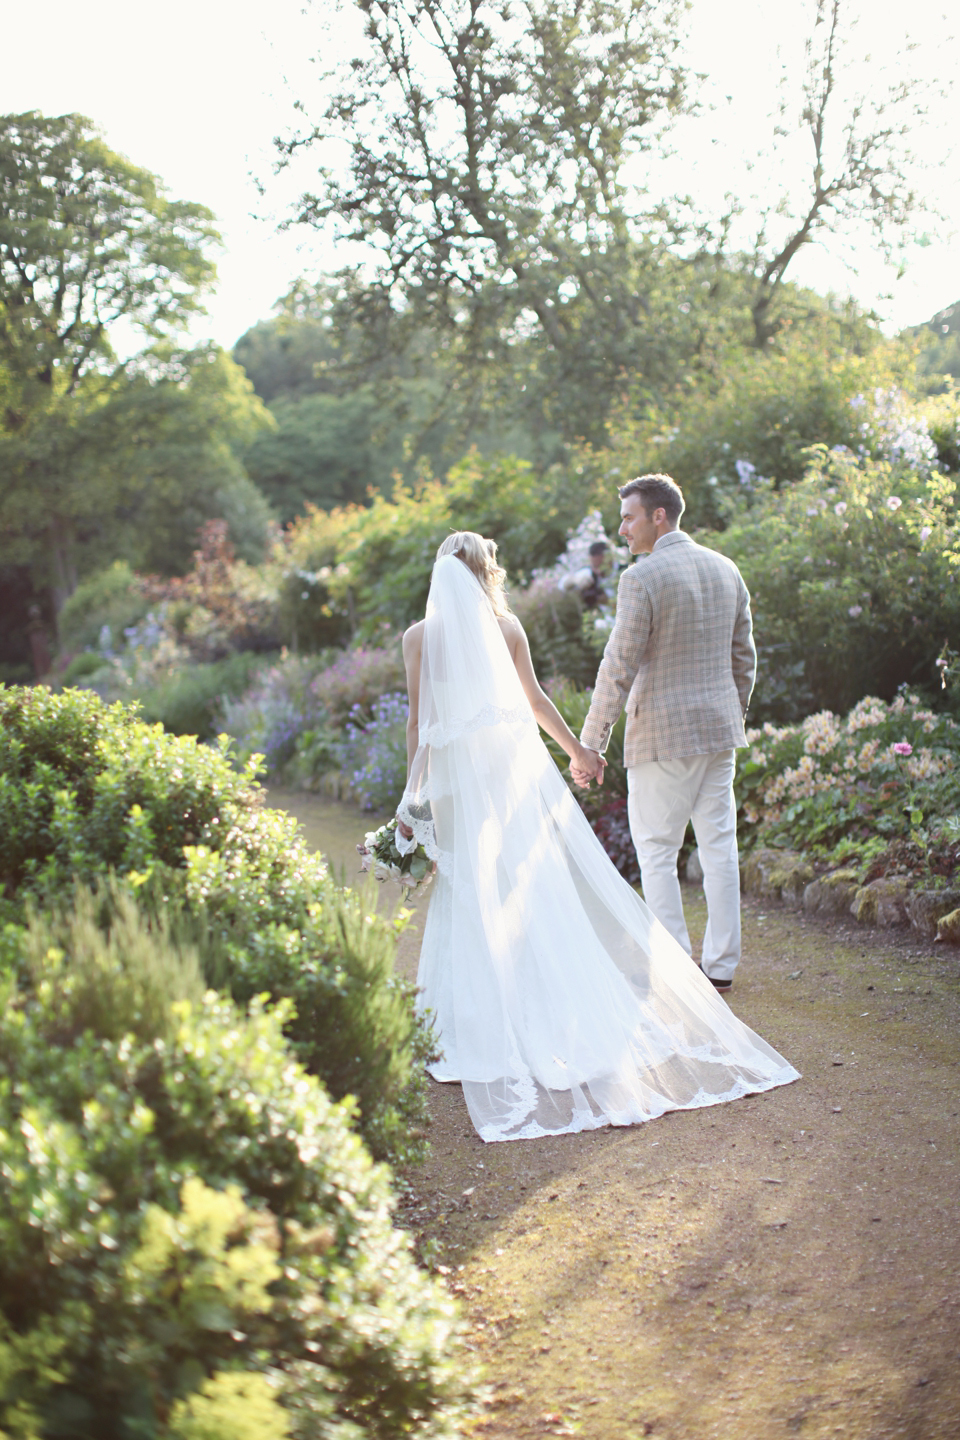 Glamorous Great Gatsby inspired wedding // Scottish wedding // Craig & Eva Sanders Photography